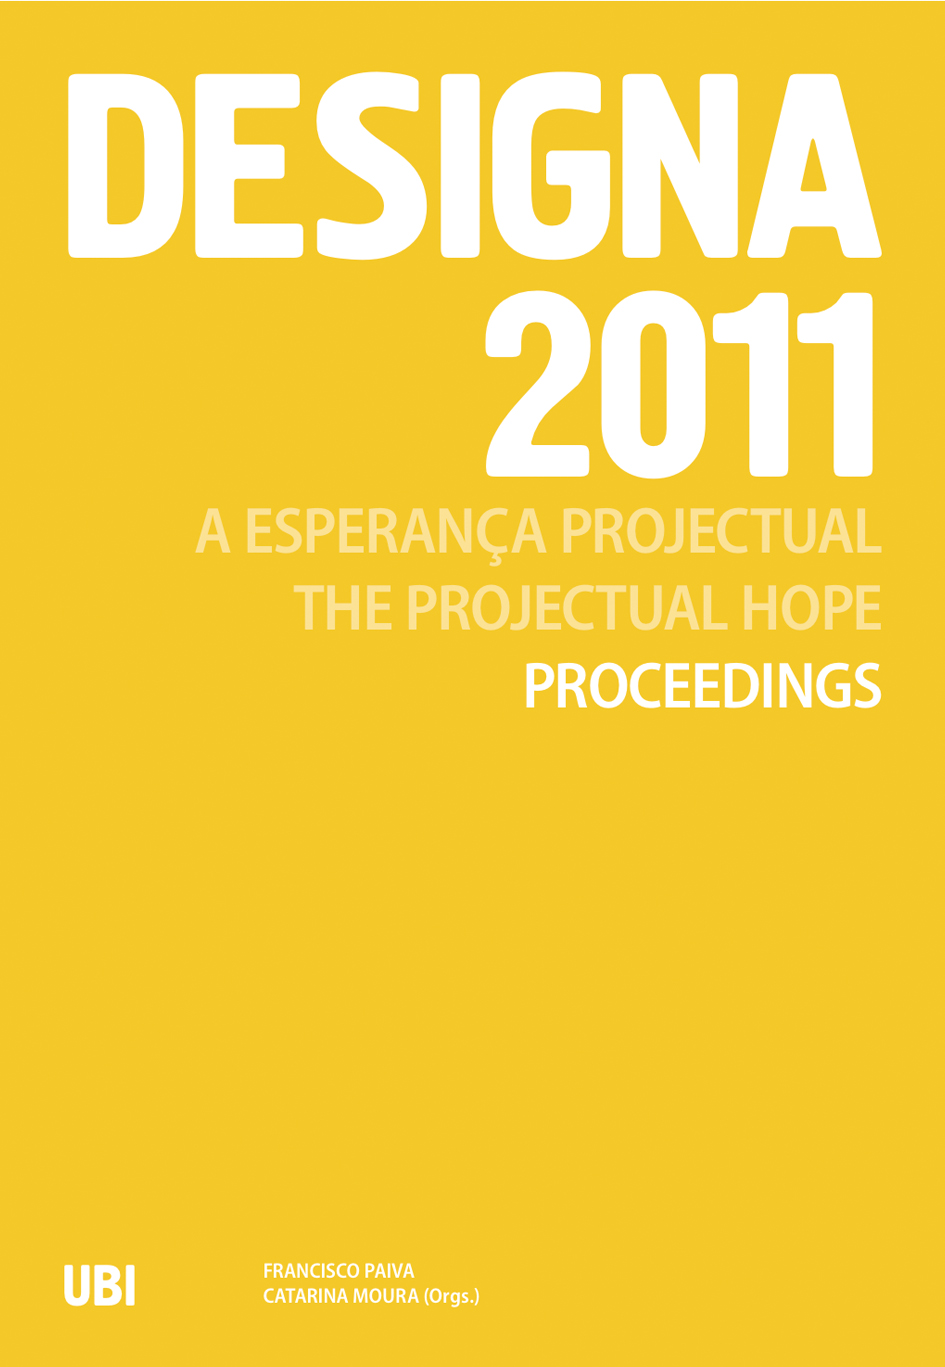 Capa: Francisco Paiva, Catarina Moura (Orgs.) (2012) DESIGNA 2011 - A Esperança Projectual. Communication  +  Philosophy  +  Humanities. .